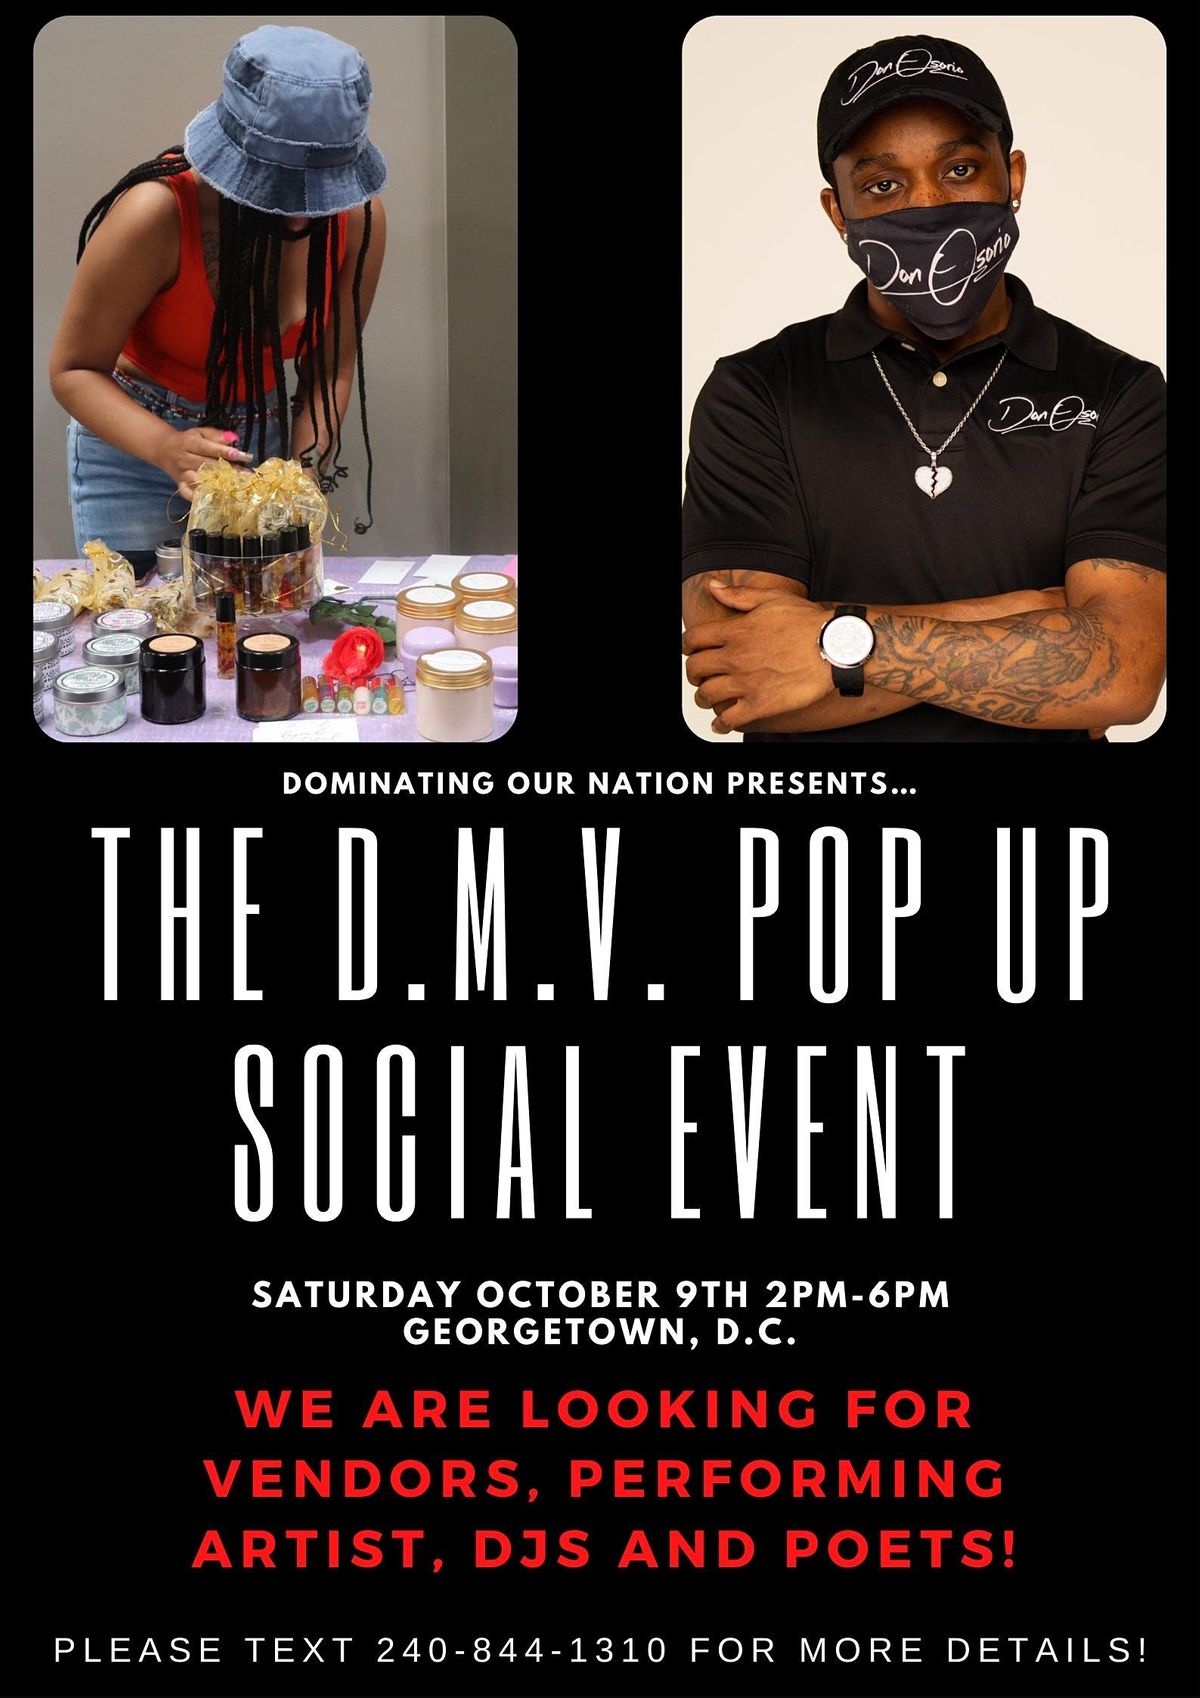 The D.M.V. Pop Up Social Event